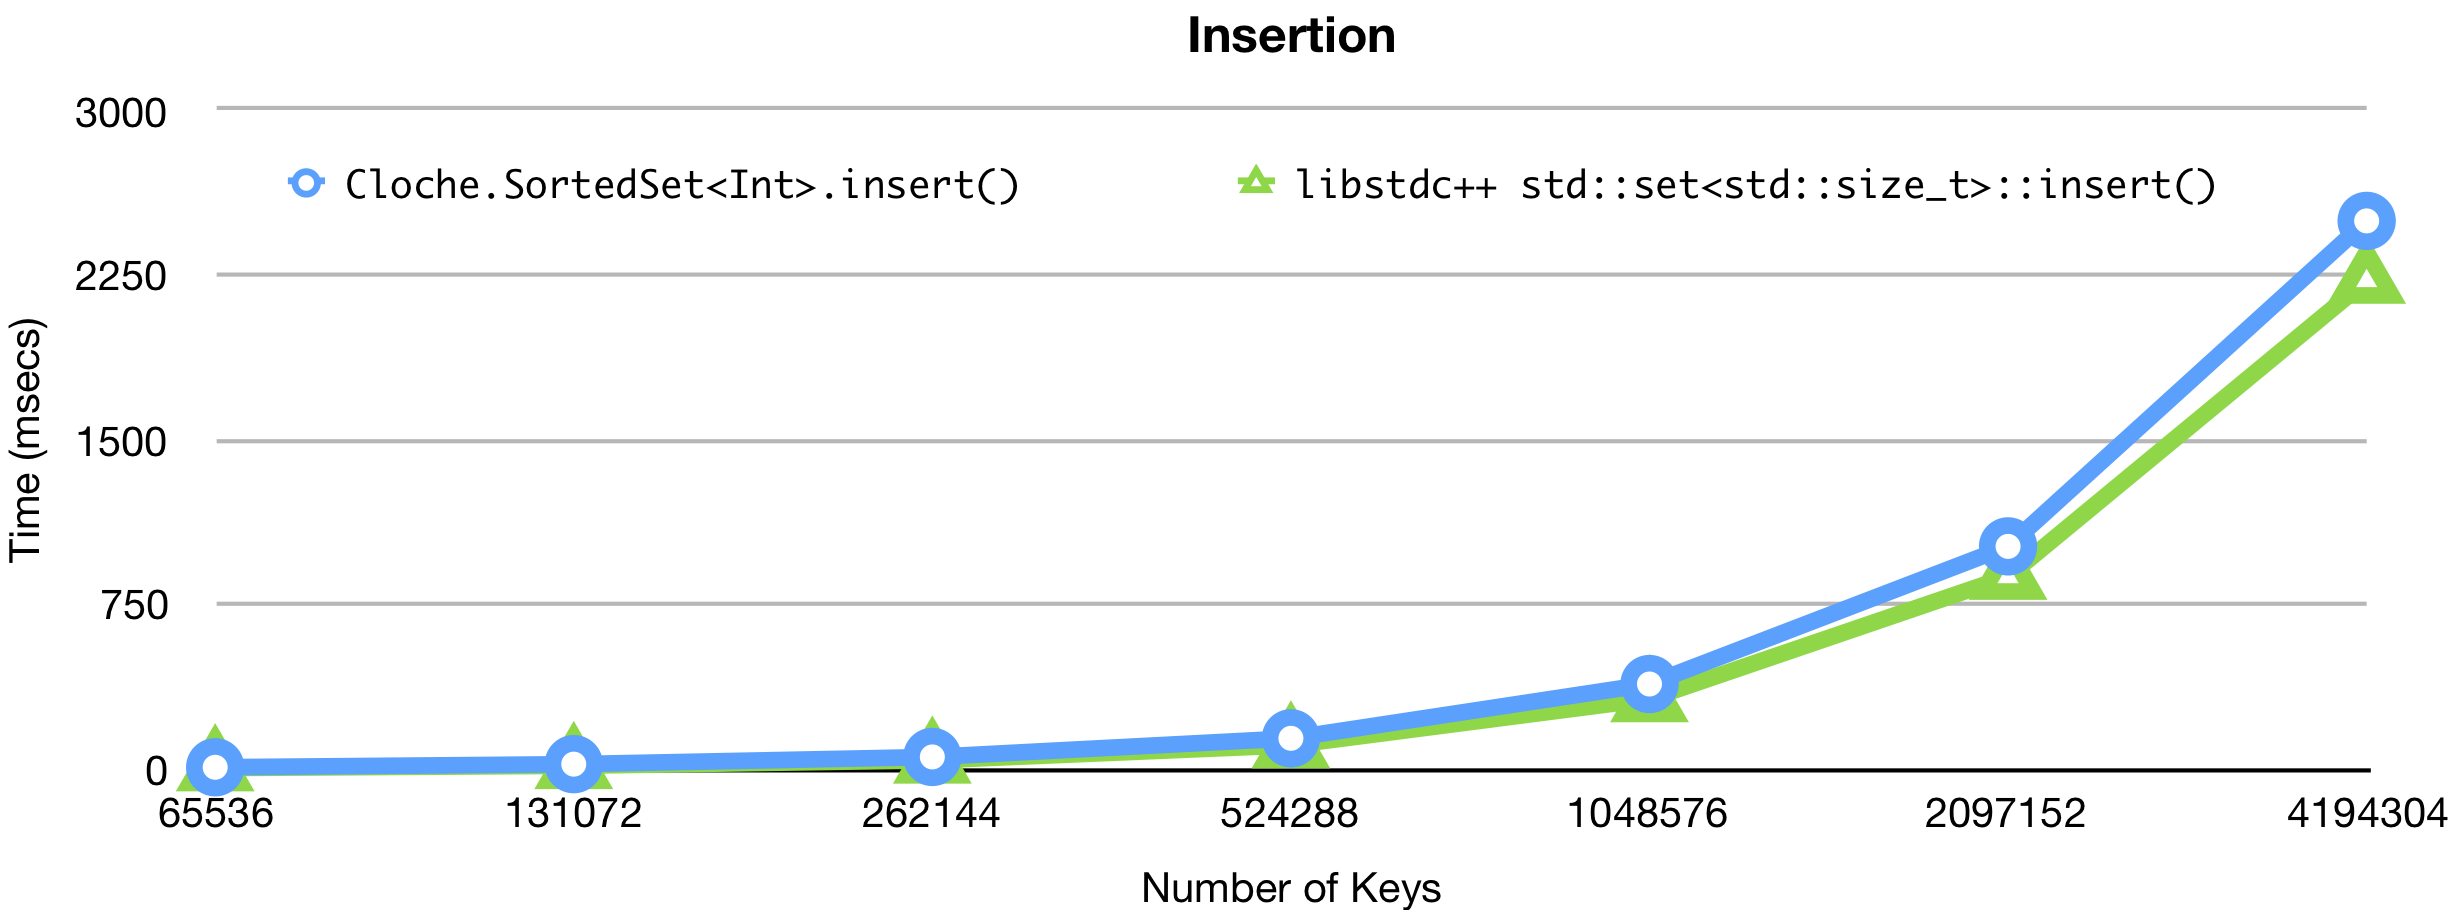 Insertion Performance Comparison under Ubuntu